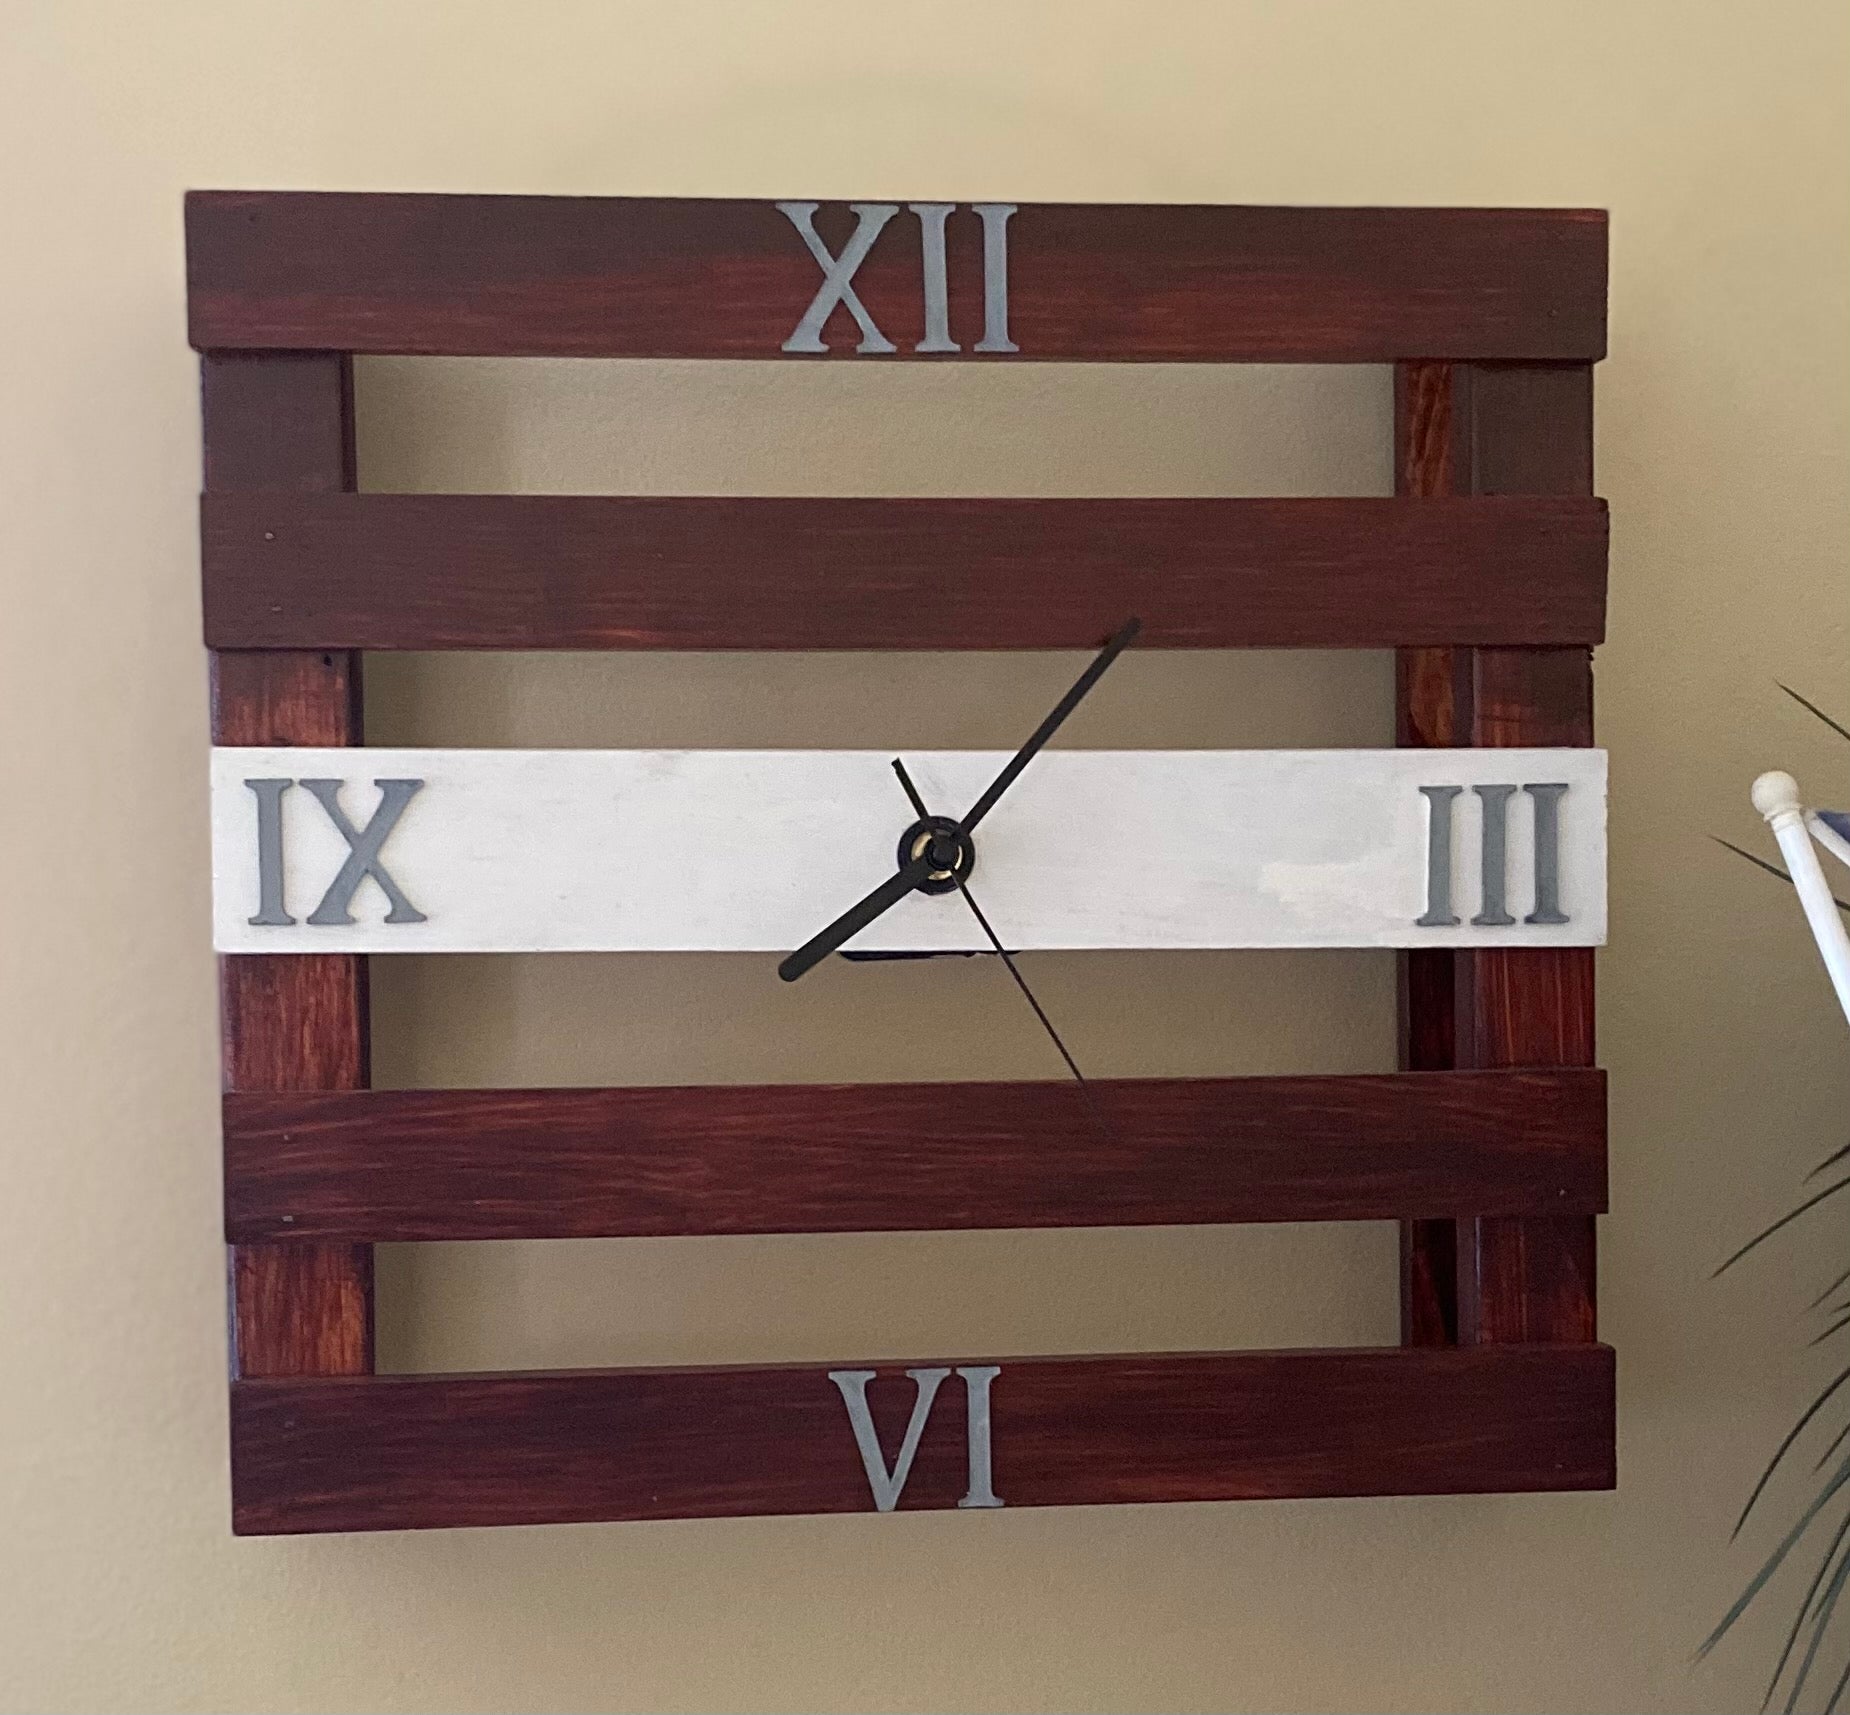 Plate pallet clock